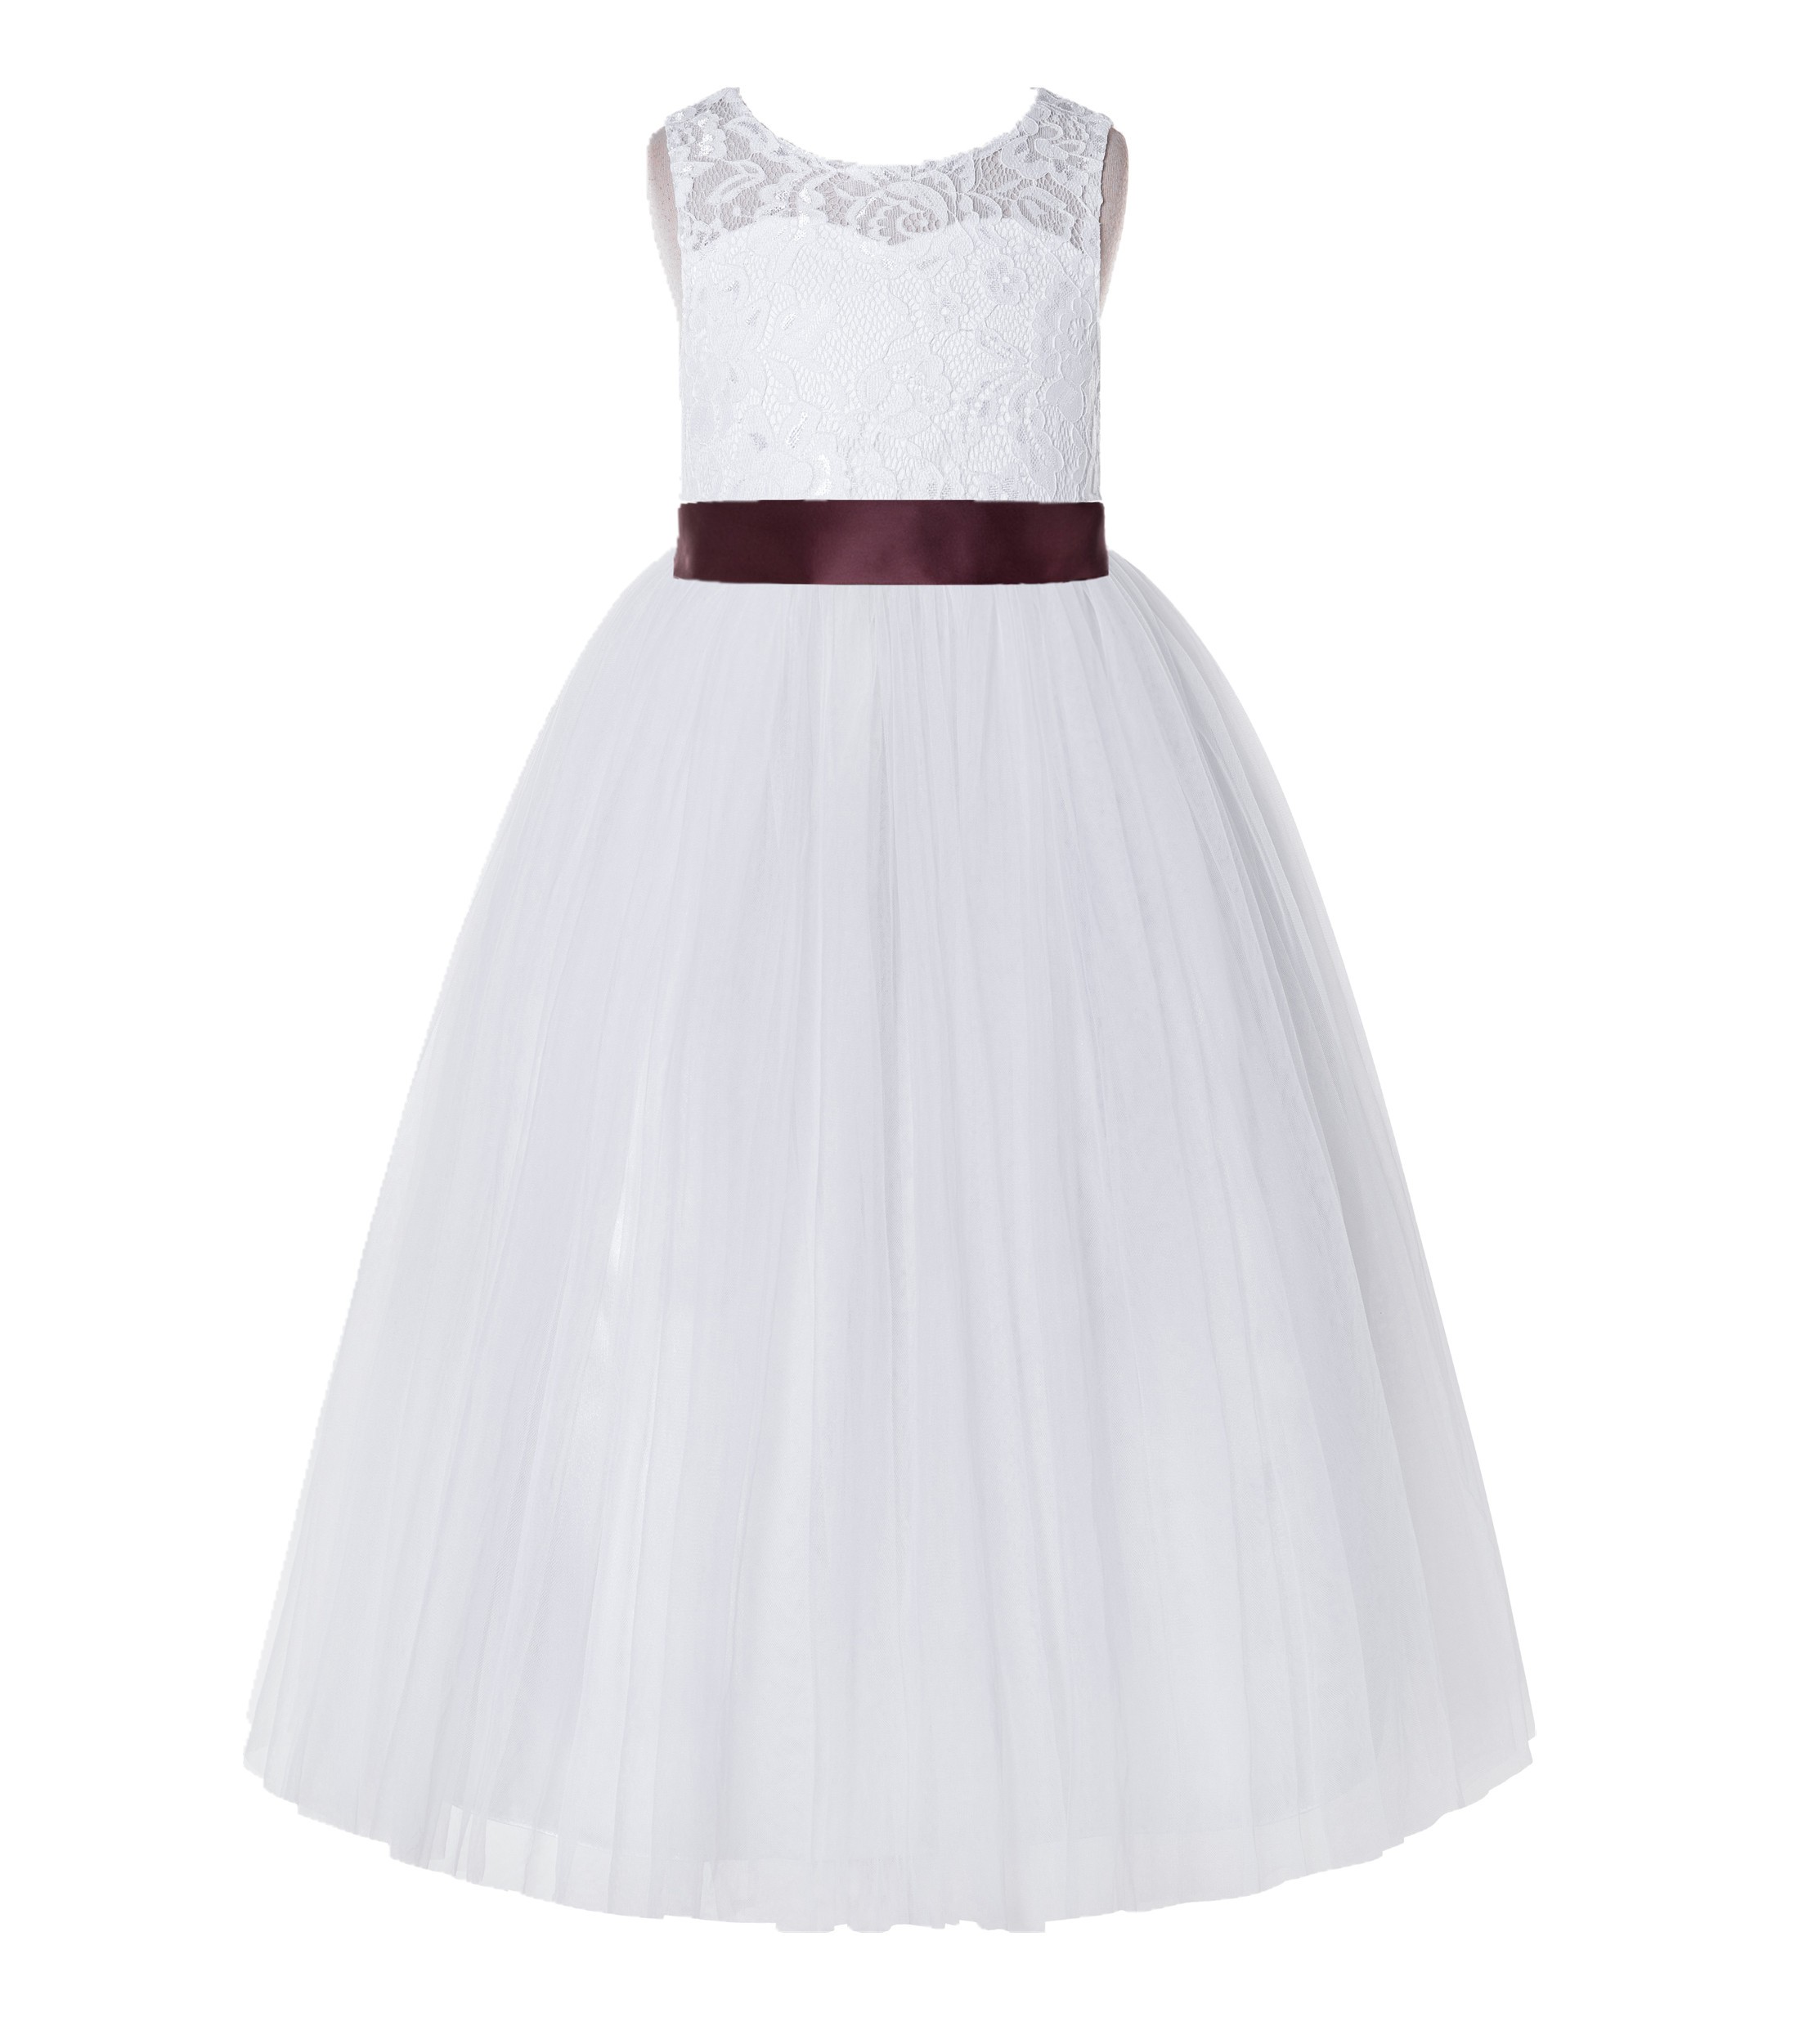 White / Burgundy Tulle A-Line Lace Flower Girl Dress 178